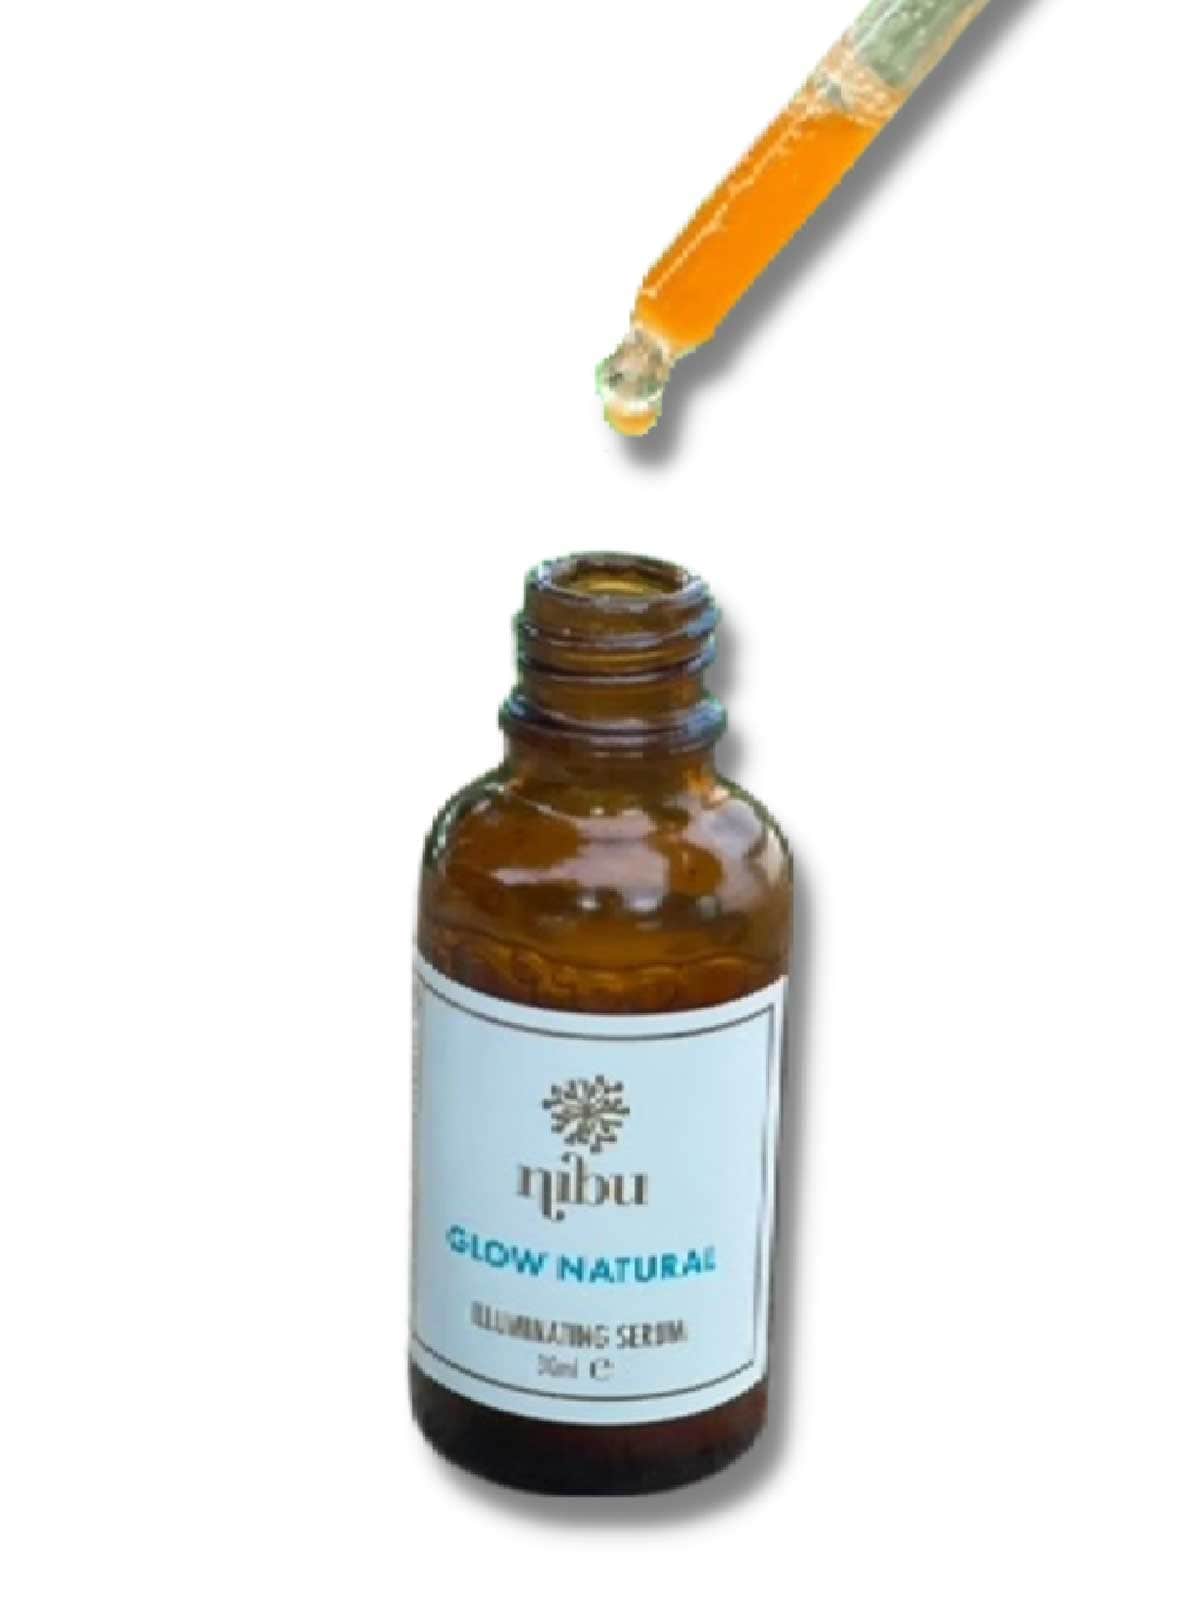 Nibu Naturals Glow Natural Serum 2